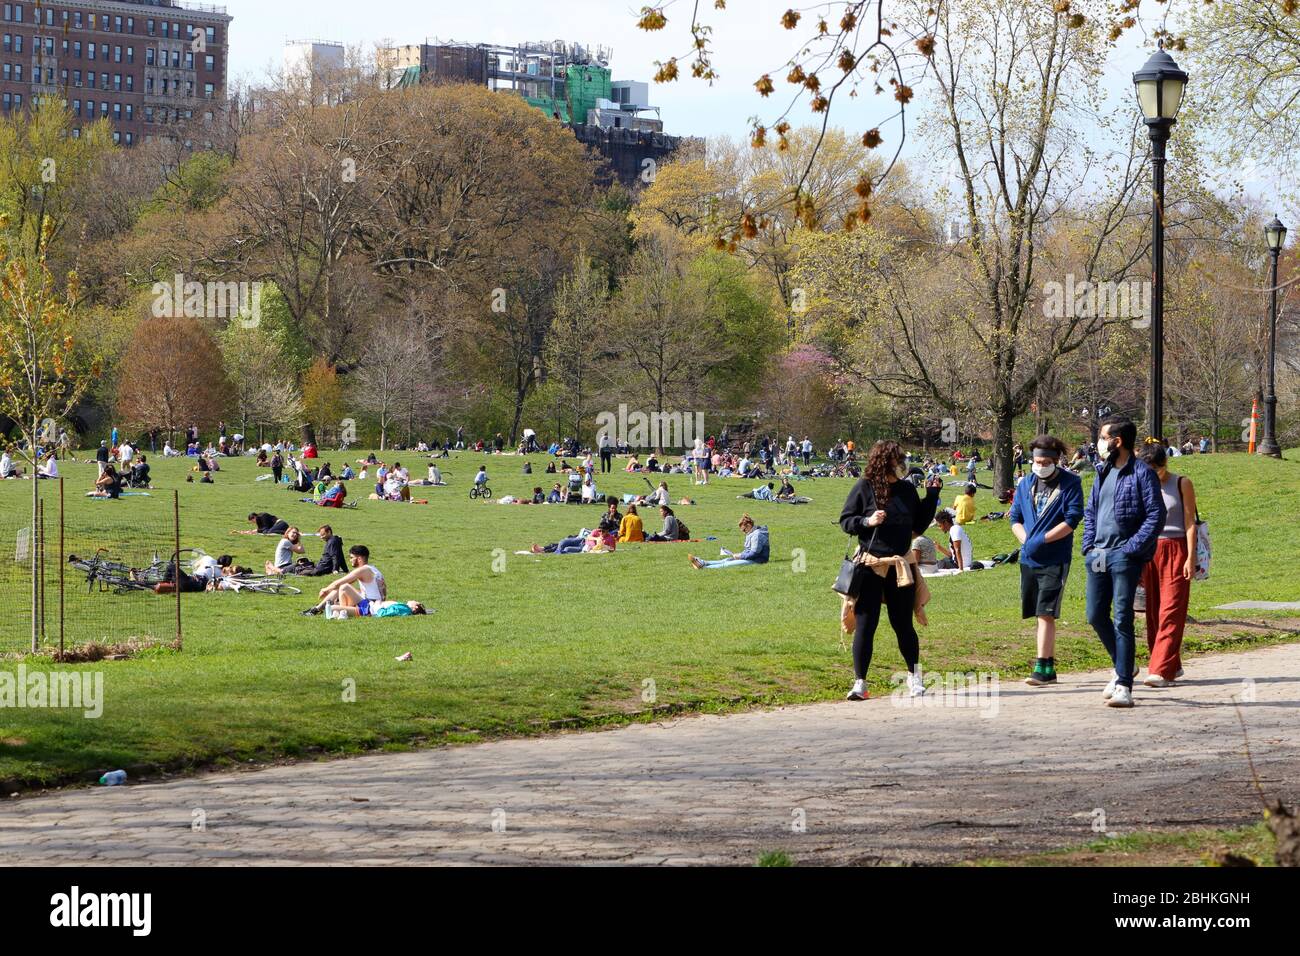 Les gens de Prospect Park dans un chaud samedi après-midi ensoleillé pendant le coronavirus COVID-19, Brooklyn, New York, NY, 25 avril 2020. Banque D'Images